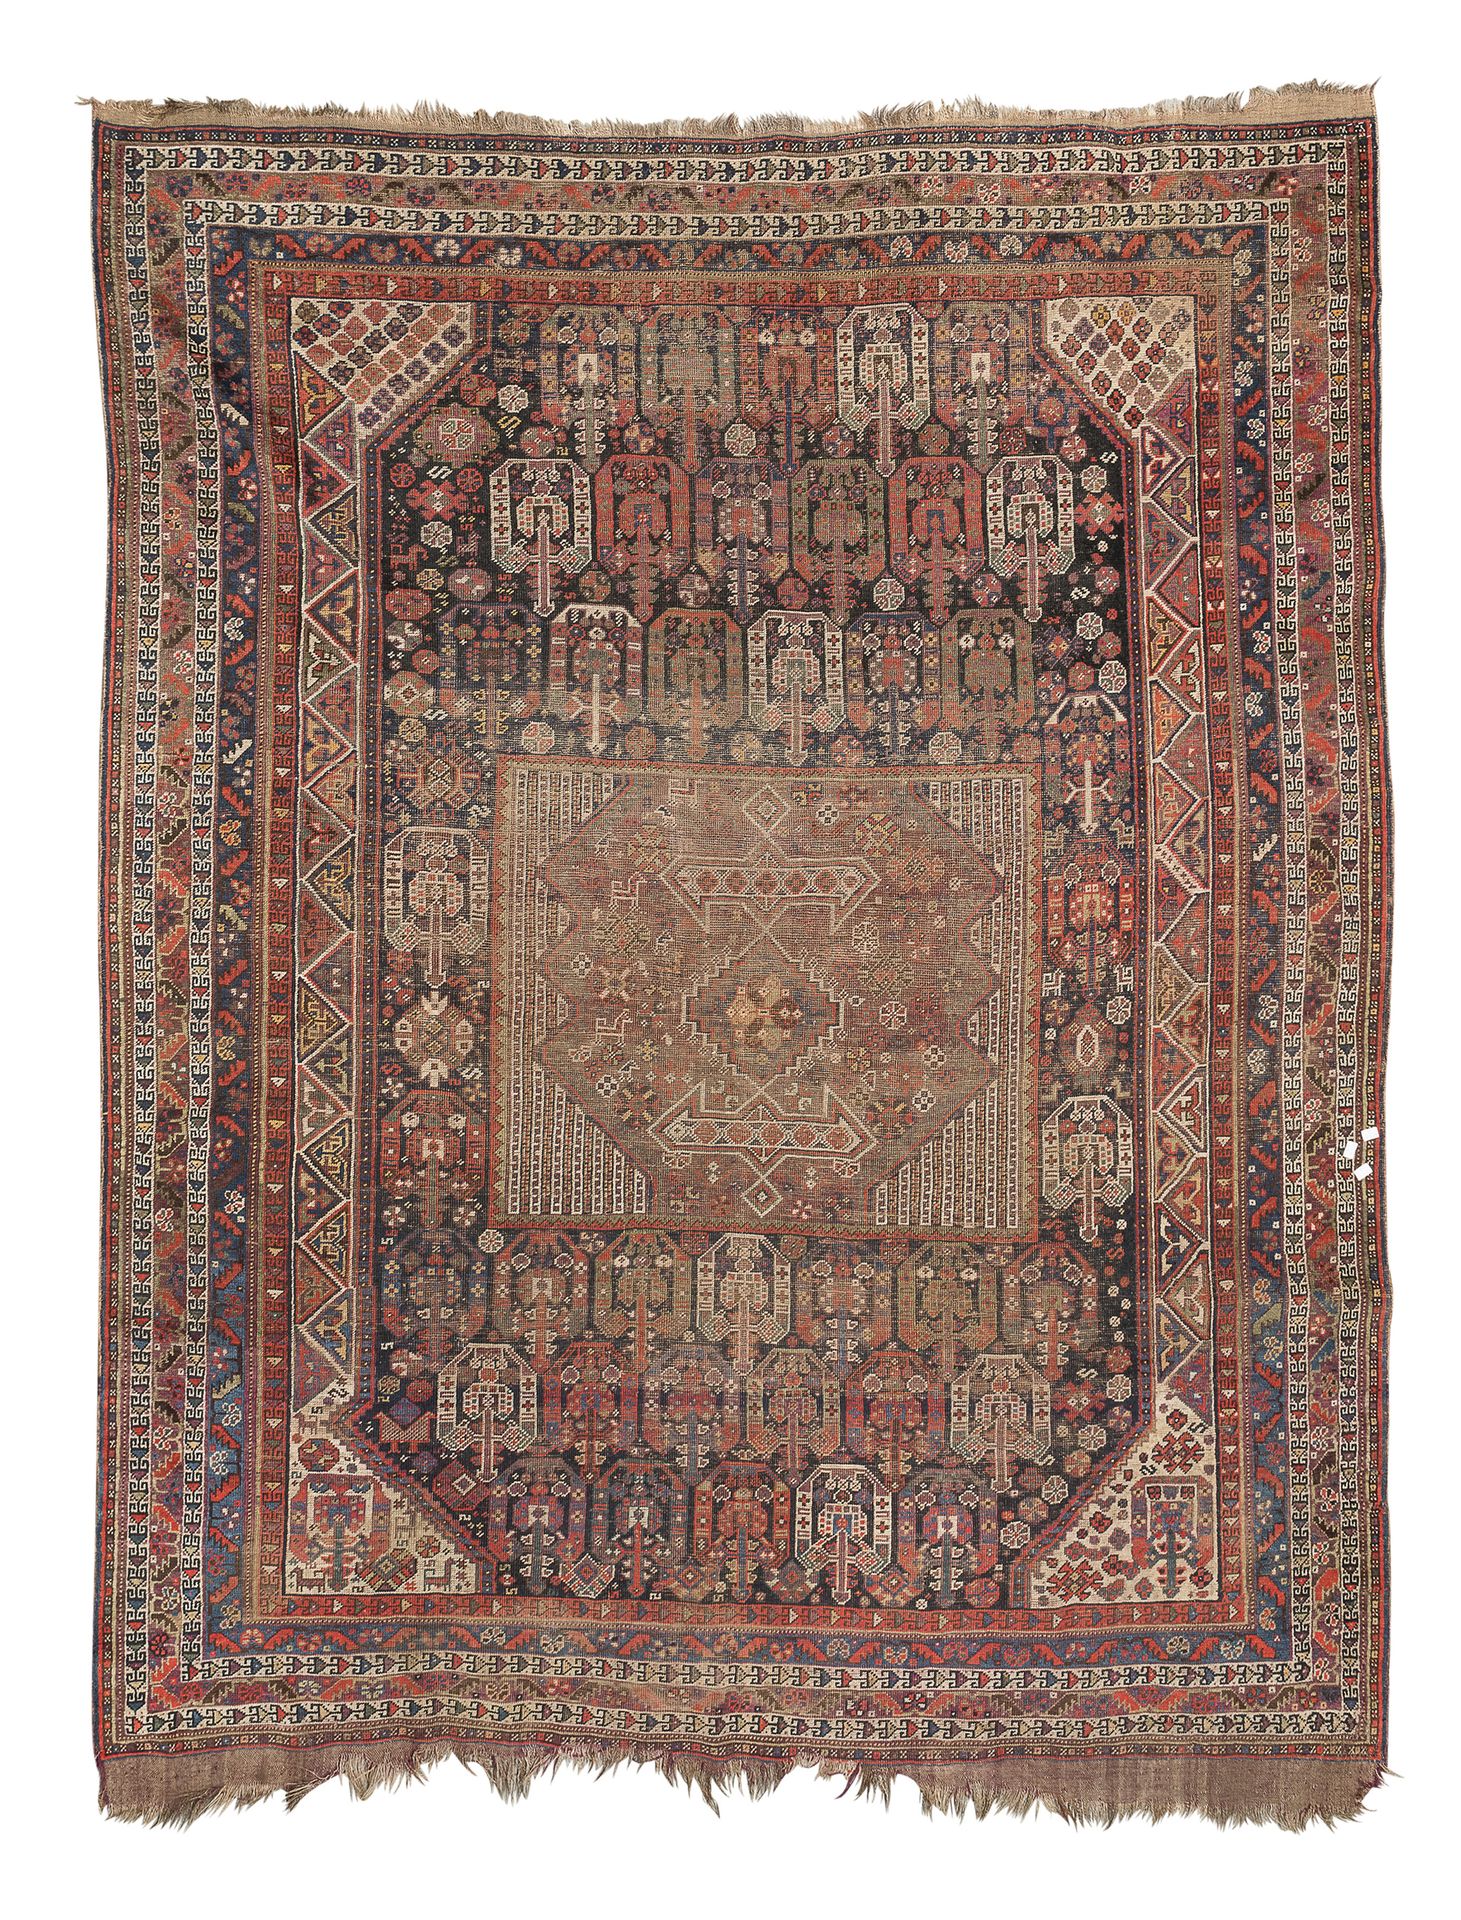 Null 希拉兹-卡什卡伊地毯，19世纪末


有一个双爪奖章和次要的风格化的博特图案和玫瑰花，在中央领域有蓝色背景。


尺寸为260 x 206厘米。


&hellip;